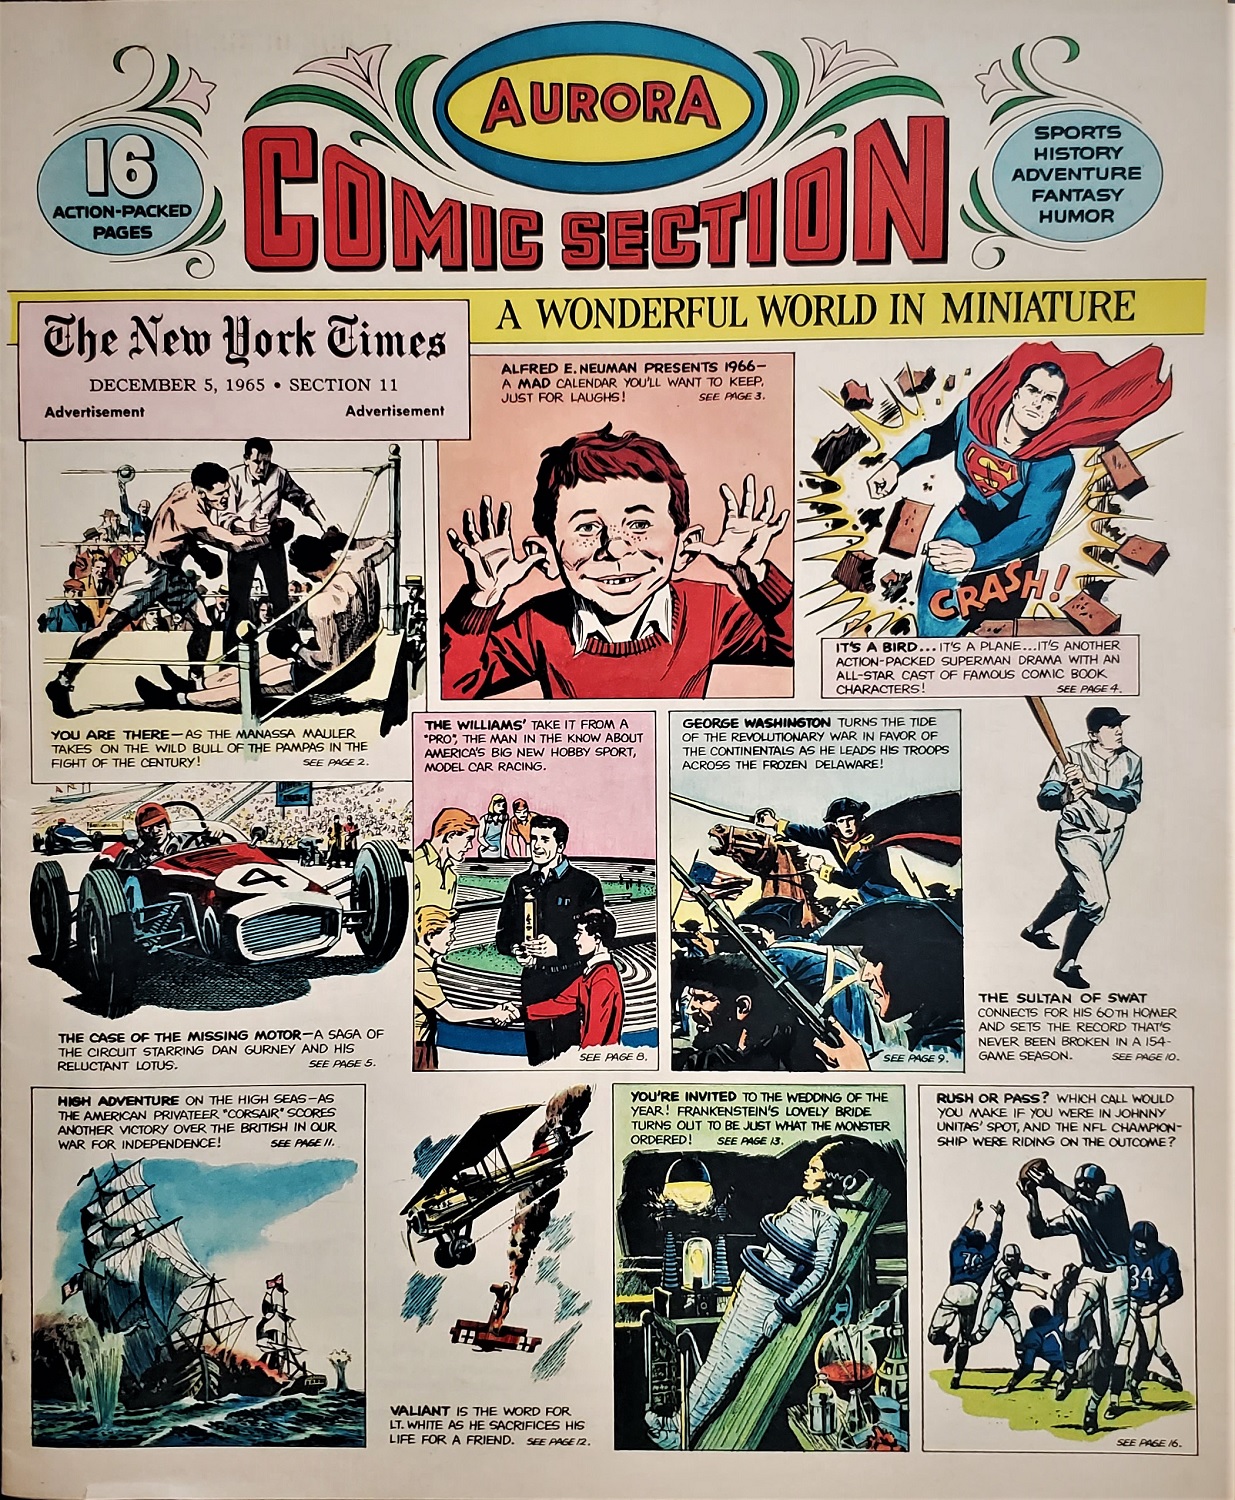 AURORA COMIC SECTION (Dec. 5, 1965)